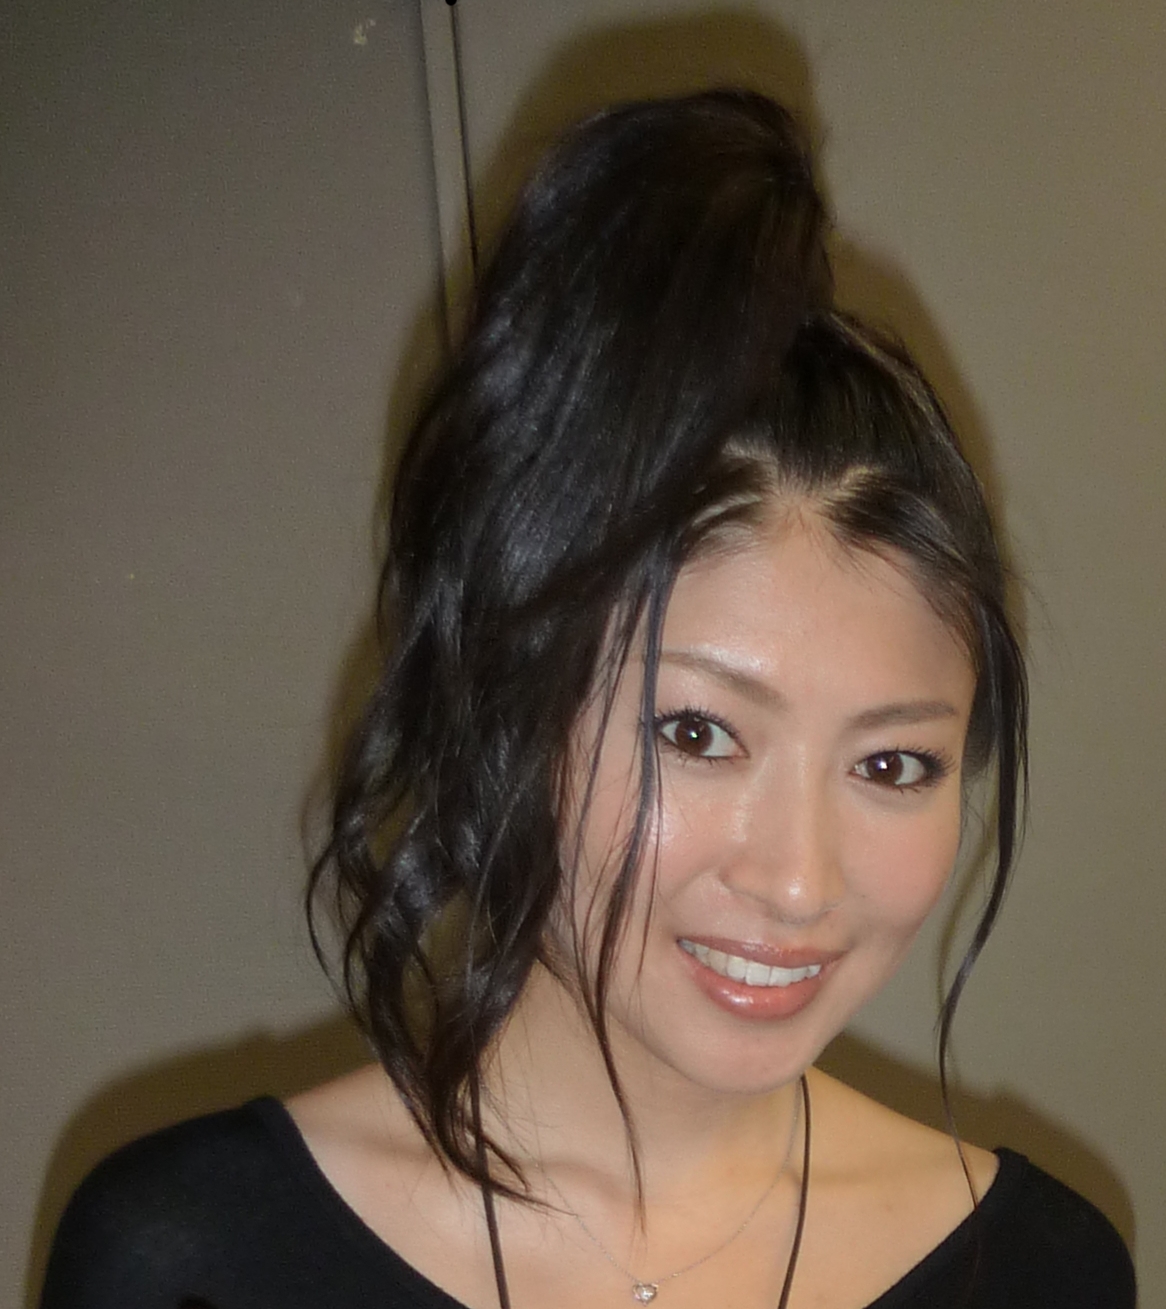 Minori Chihara Japanese Voice Actress, Singer